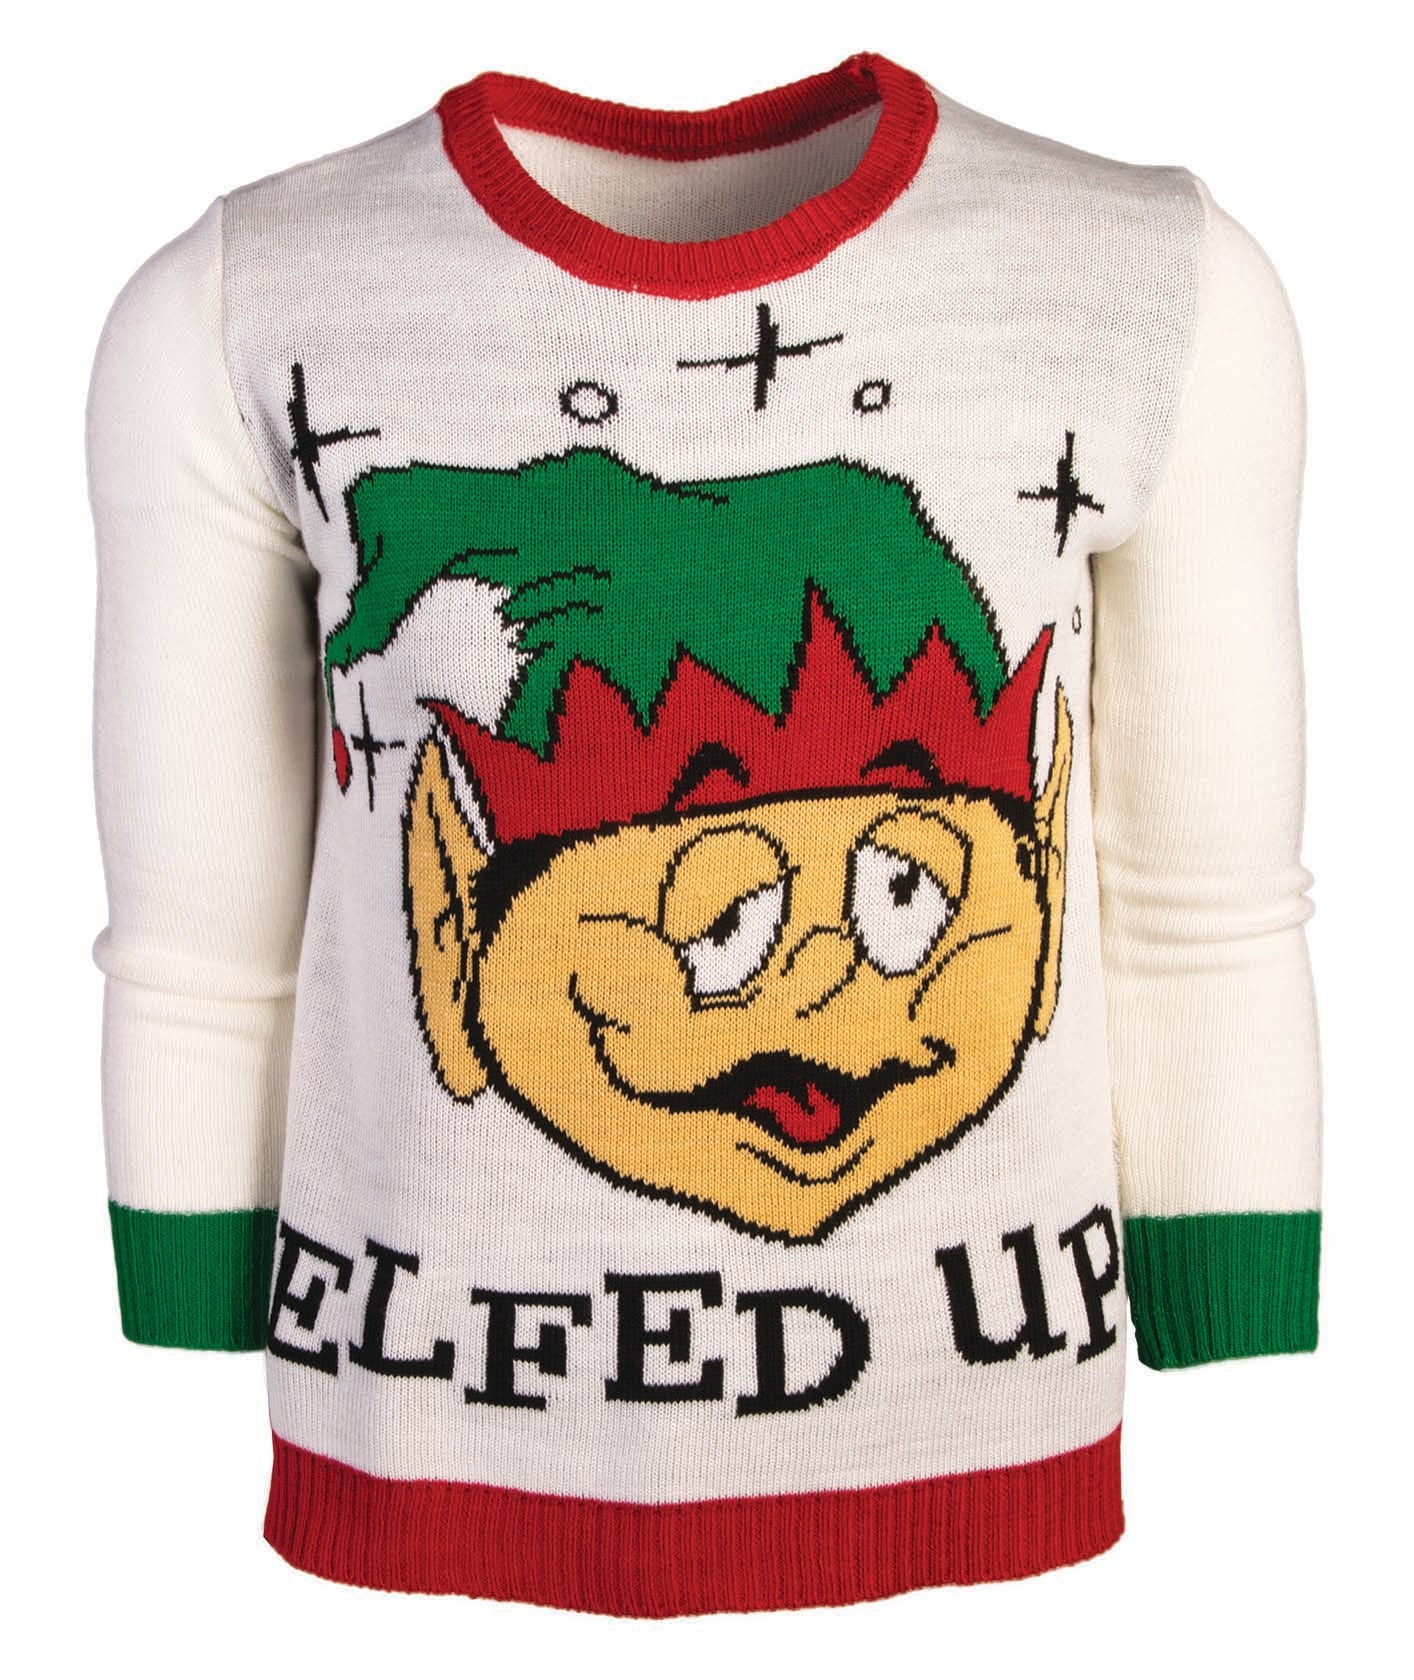 Sweater: Elfed Up